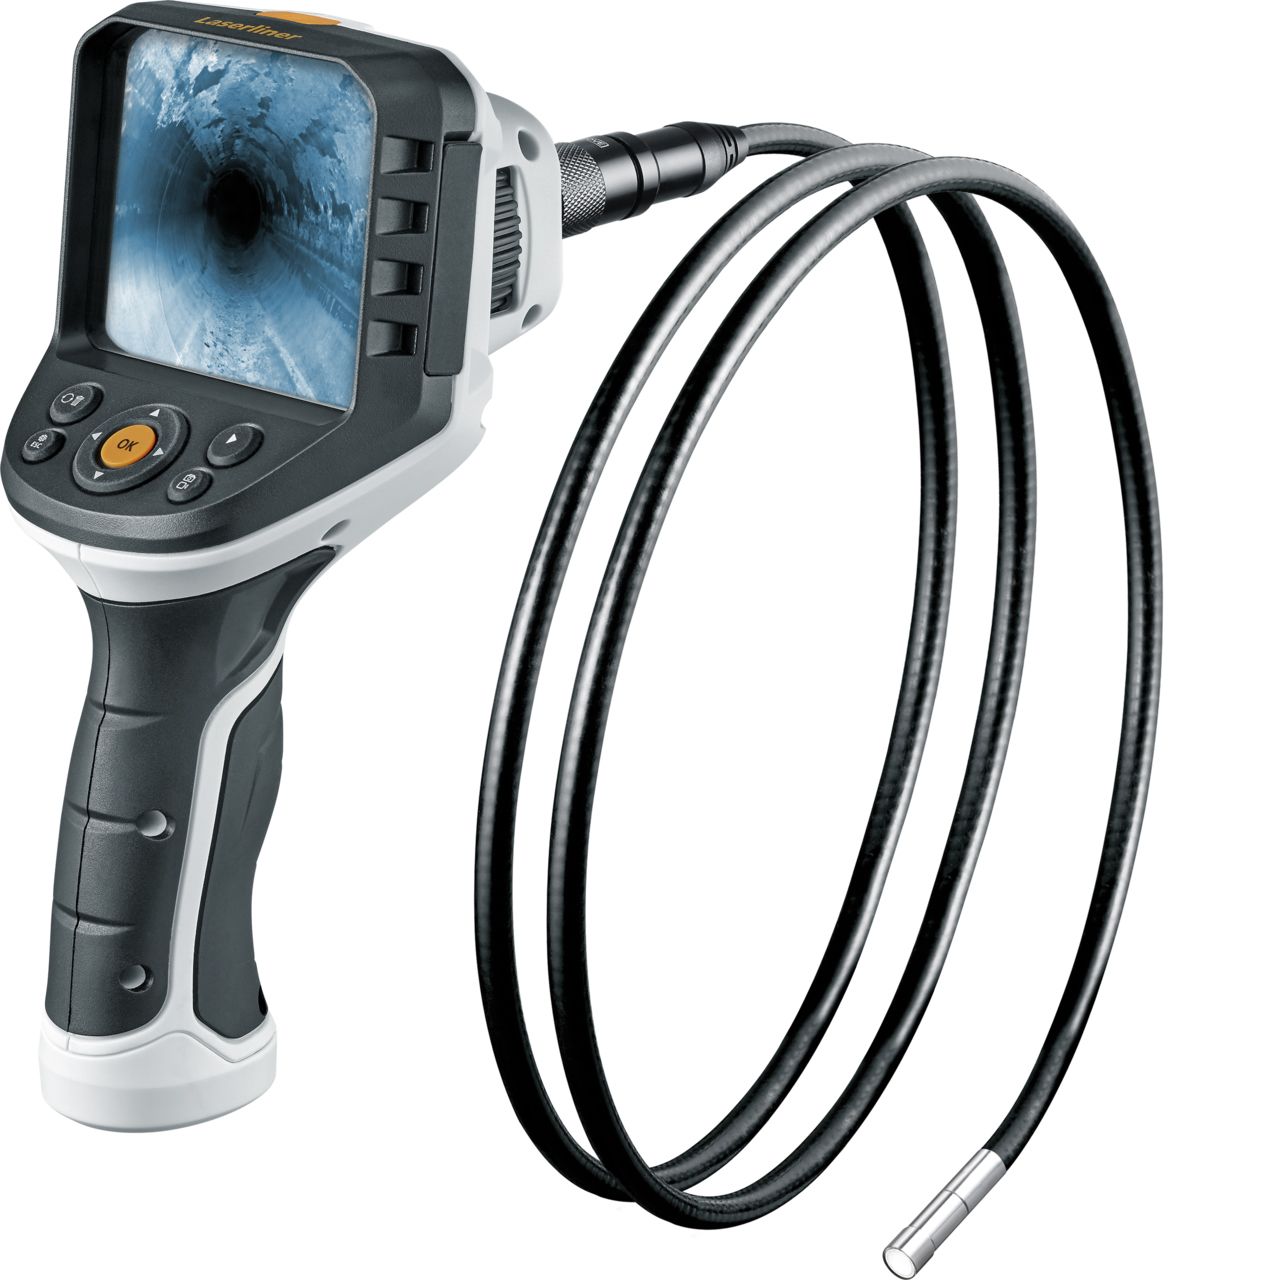 Laserliner 6mm probe Inspection Camera Kit, 1500mm Probe Length, 640 x 480pixels Resolution, LED Illumination